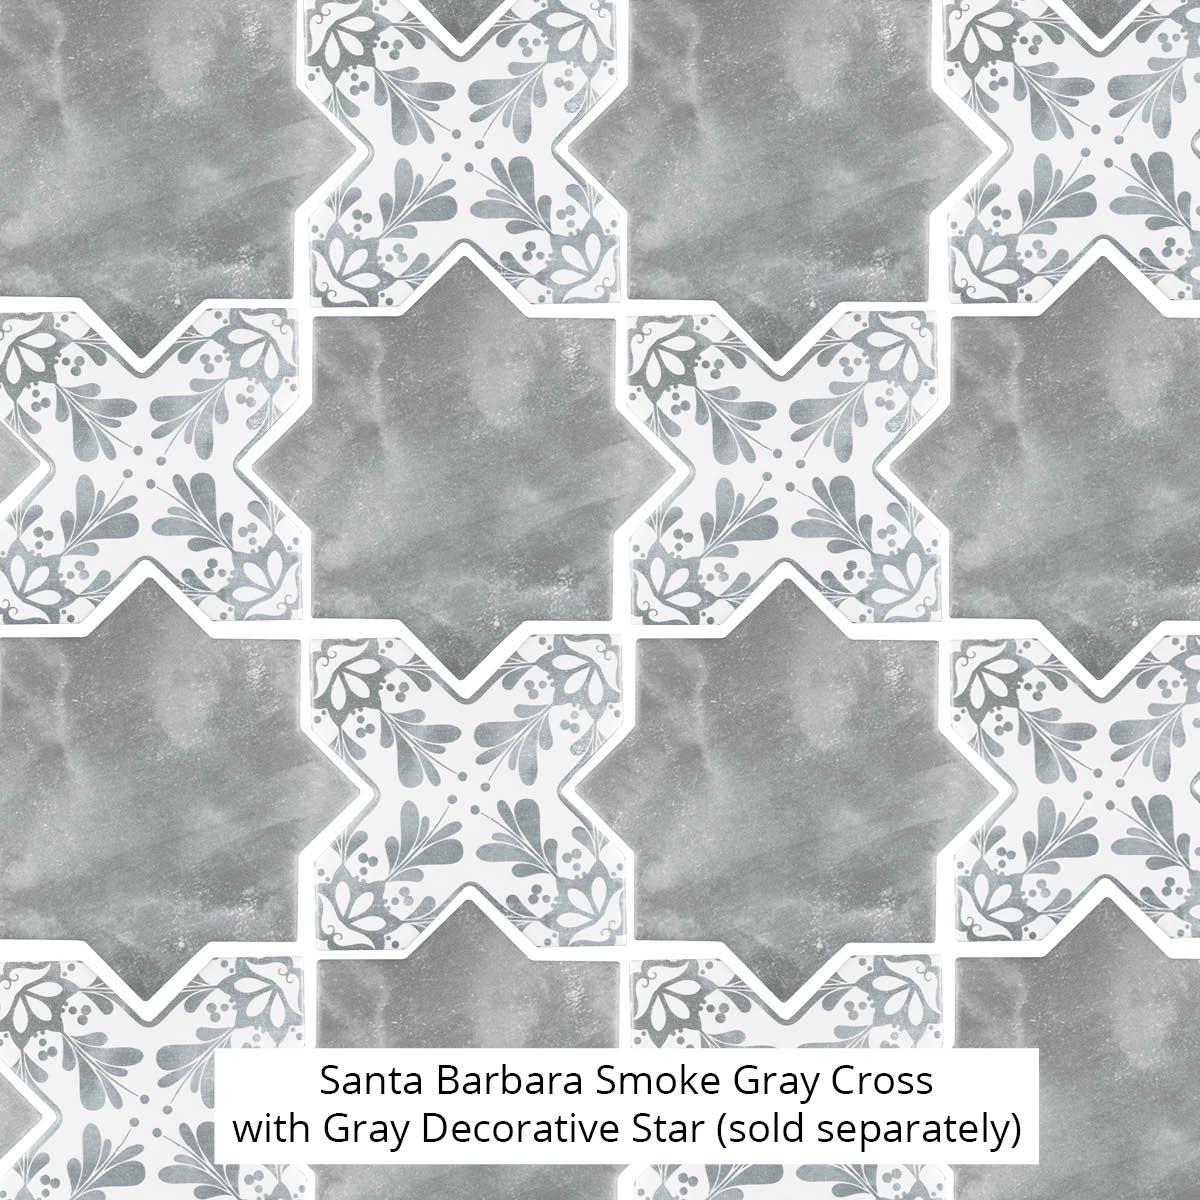 Santa Barbara Smoke Gray Star Ceramic Tile | Star and Cross Pattern Tile